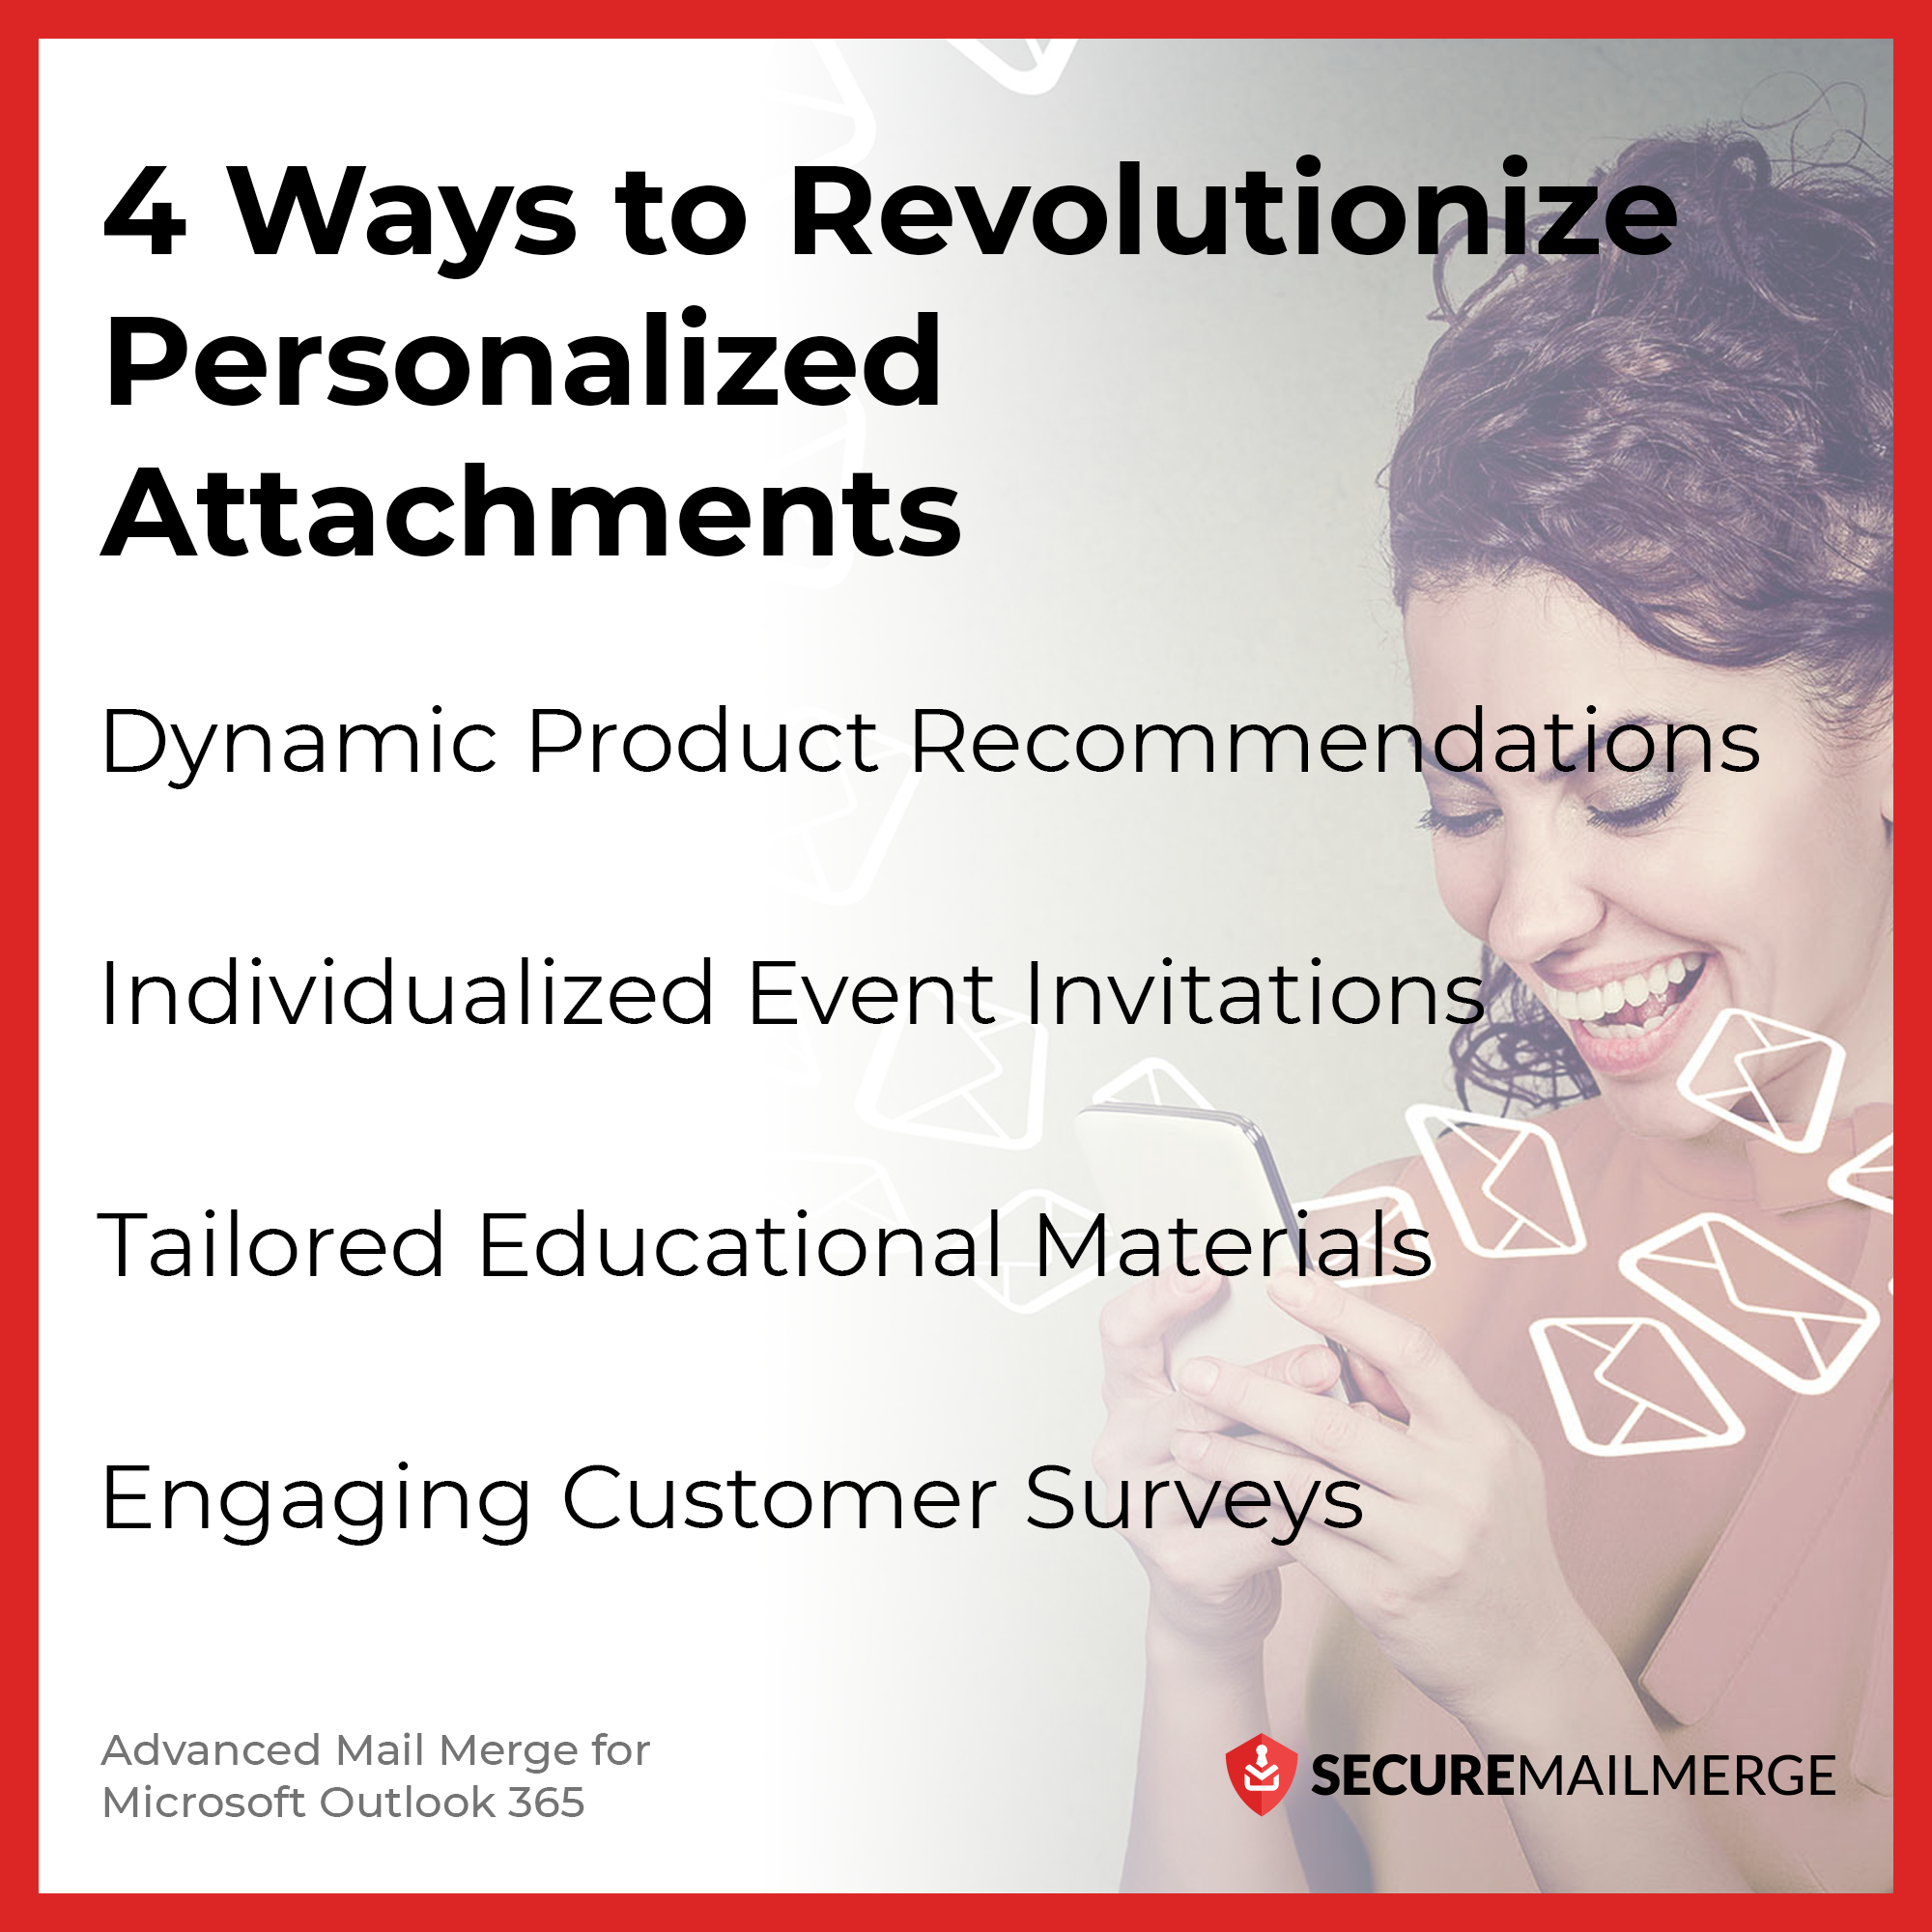 4 Ways to Revolutionize Personalized Attachments